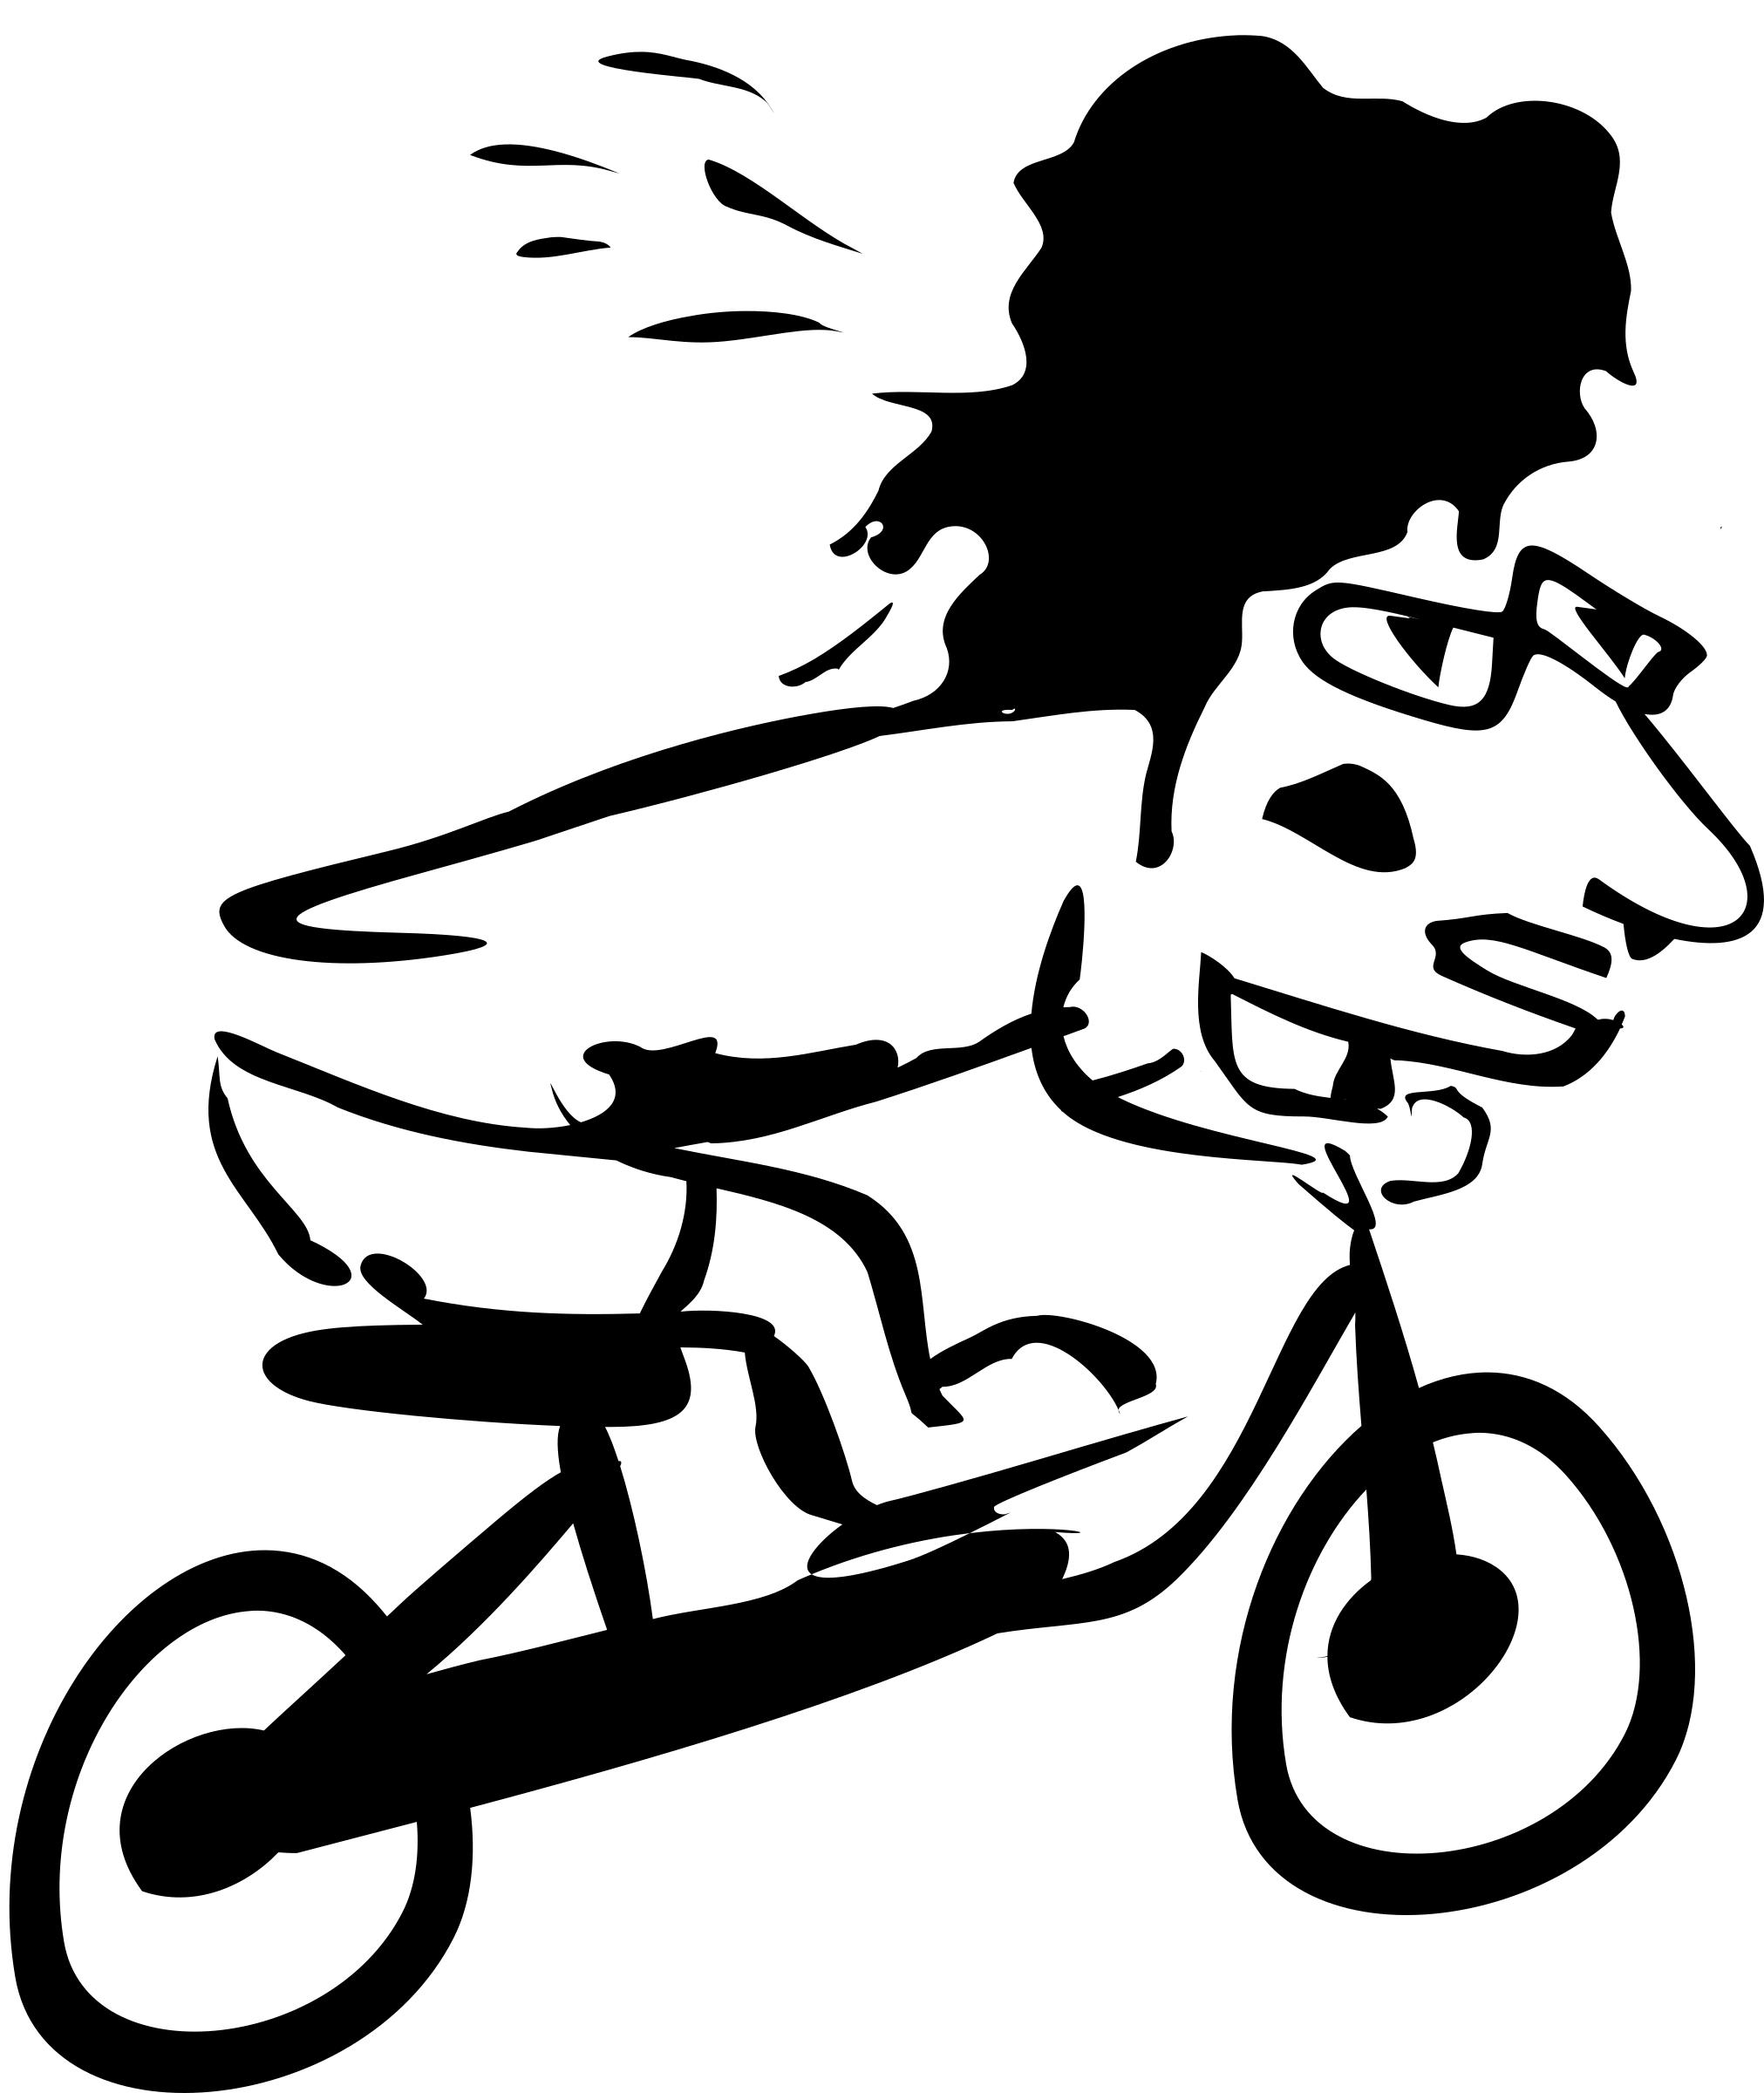 Bike black / white PNG icons